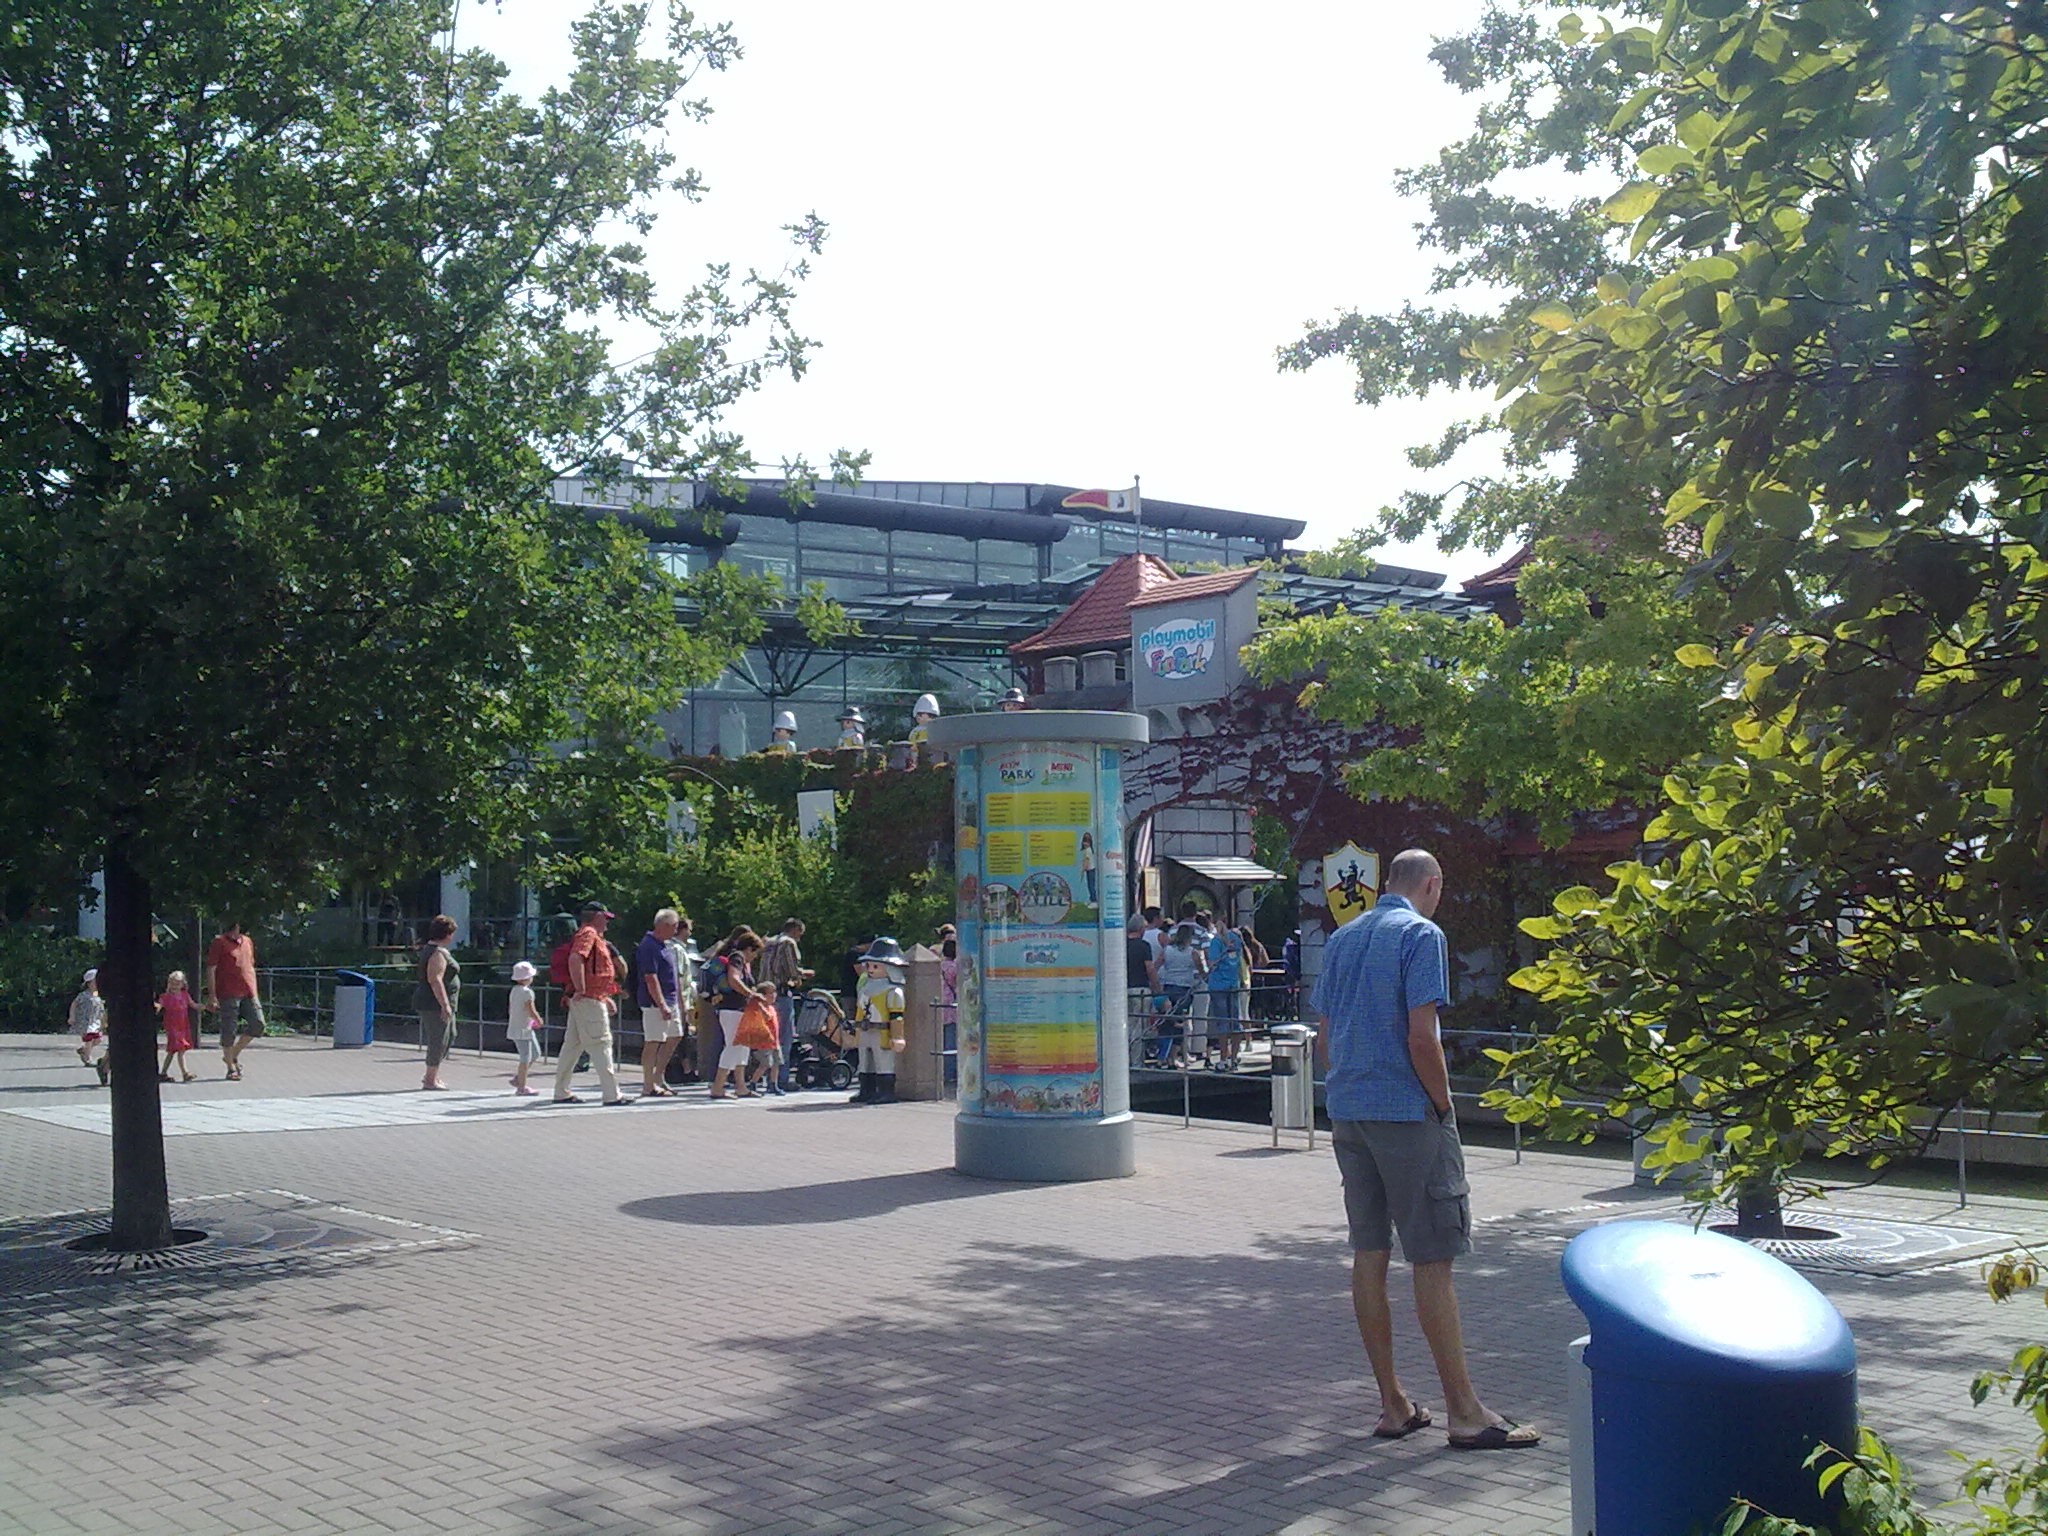 Eingang zum Playmobil-Fun-Park